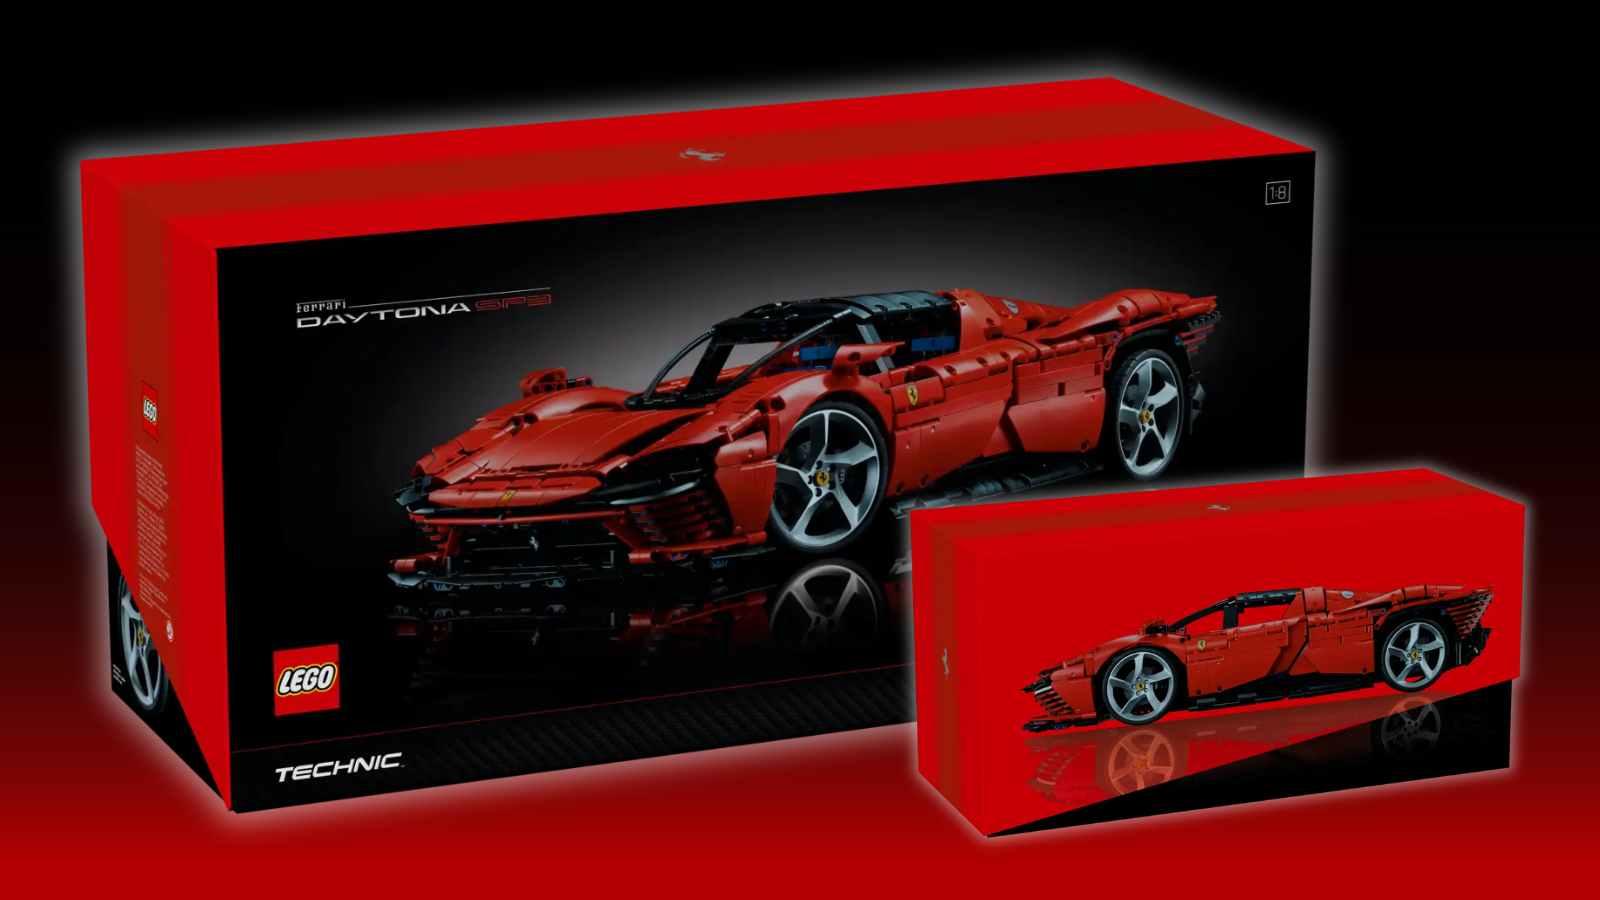 LEGO Technic Ferrari Daytona SP3 in box, displayed on black and red background